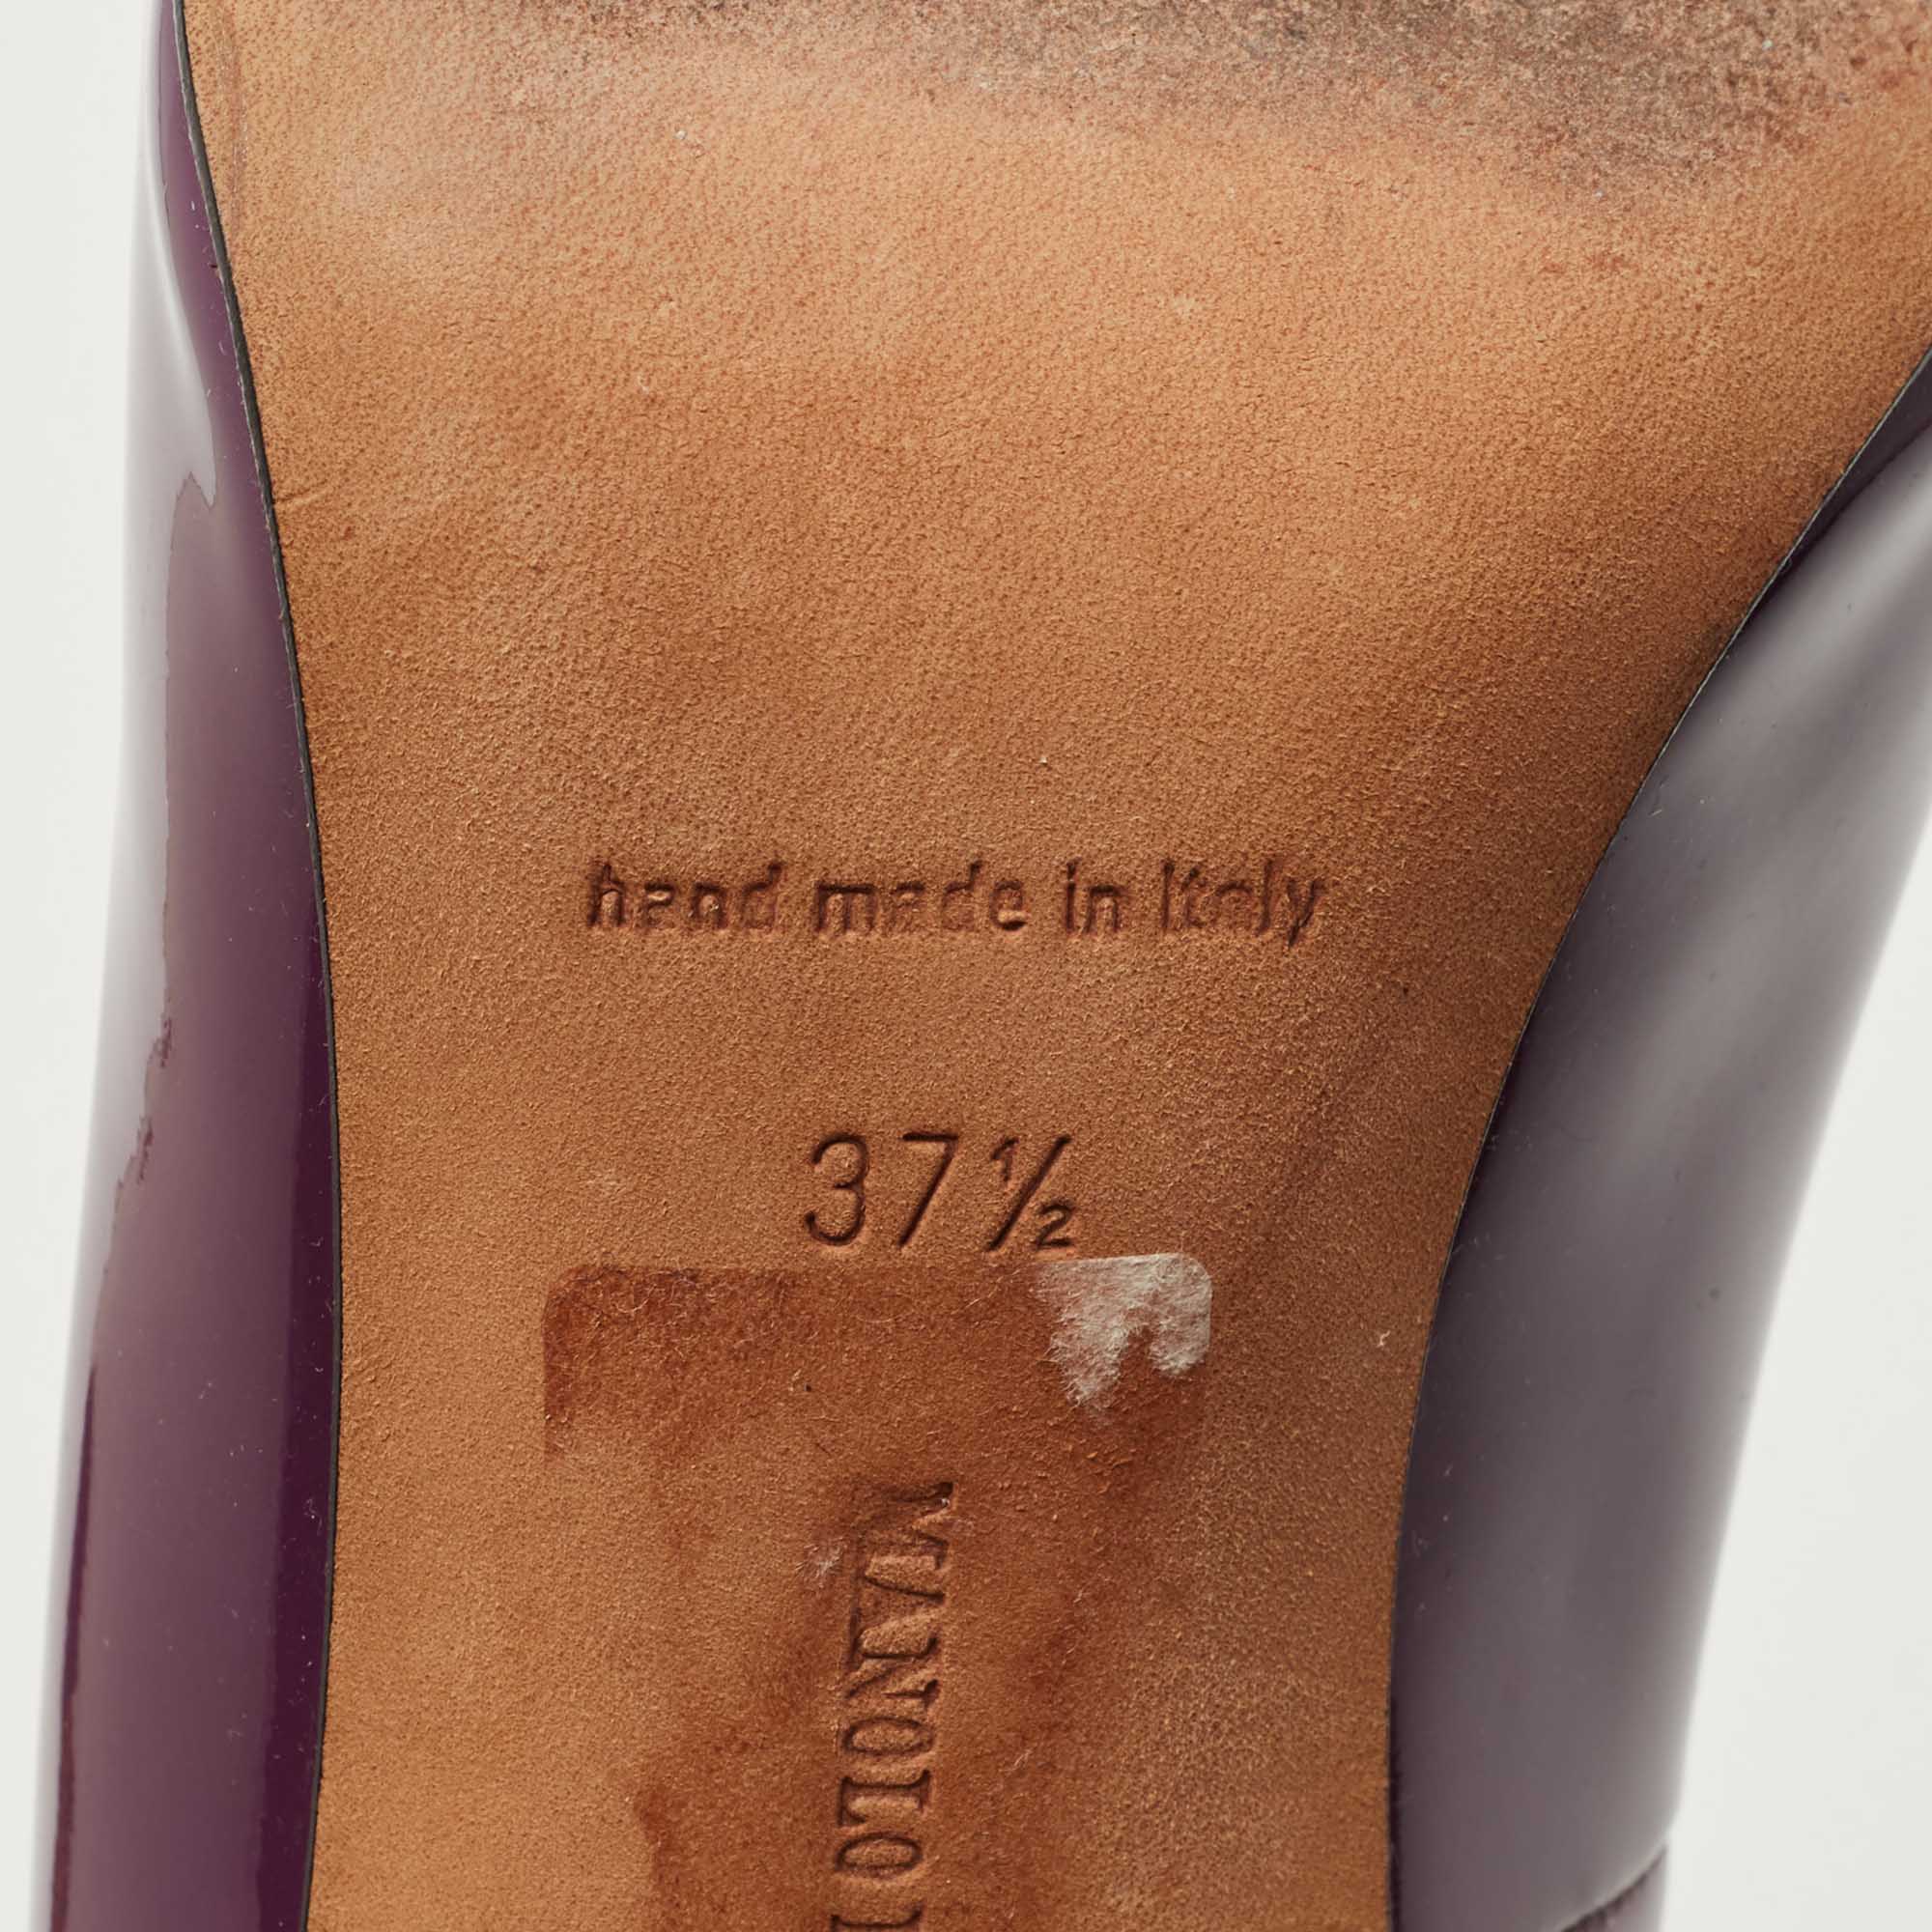 Manolo Blahnik Purple Patent Leather BB Pointed Toe Pumps Size 37.5